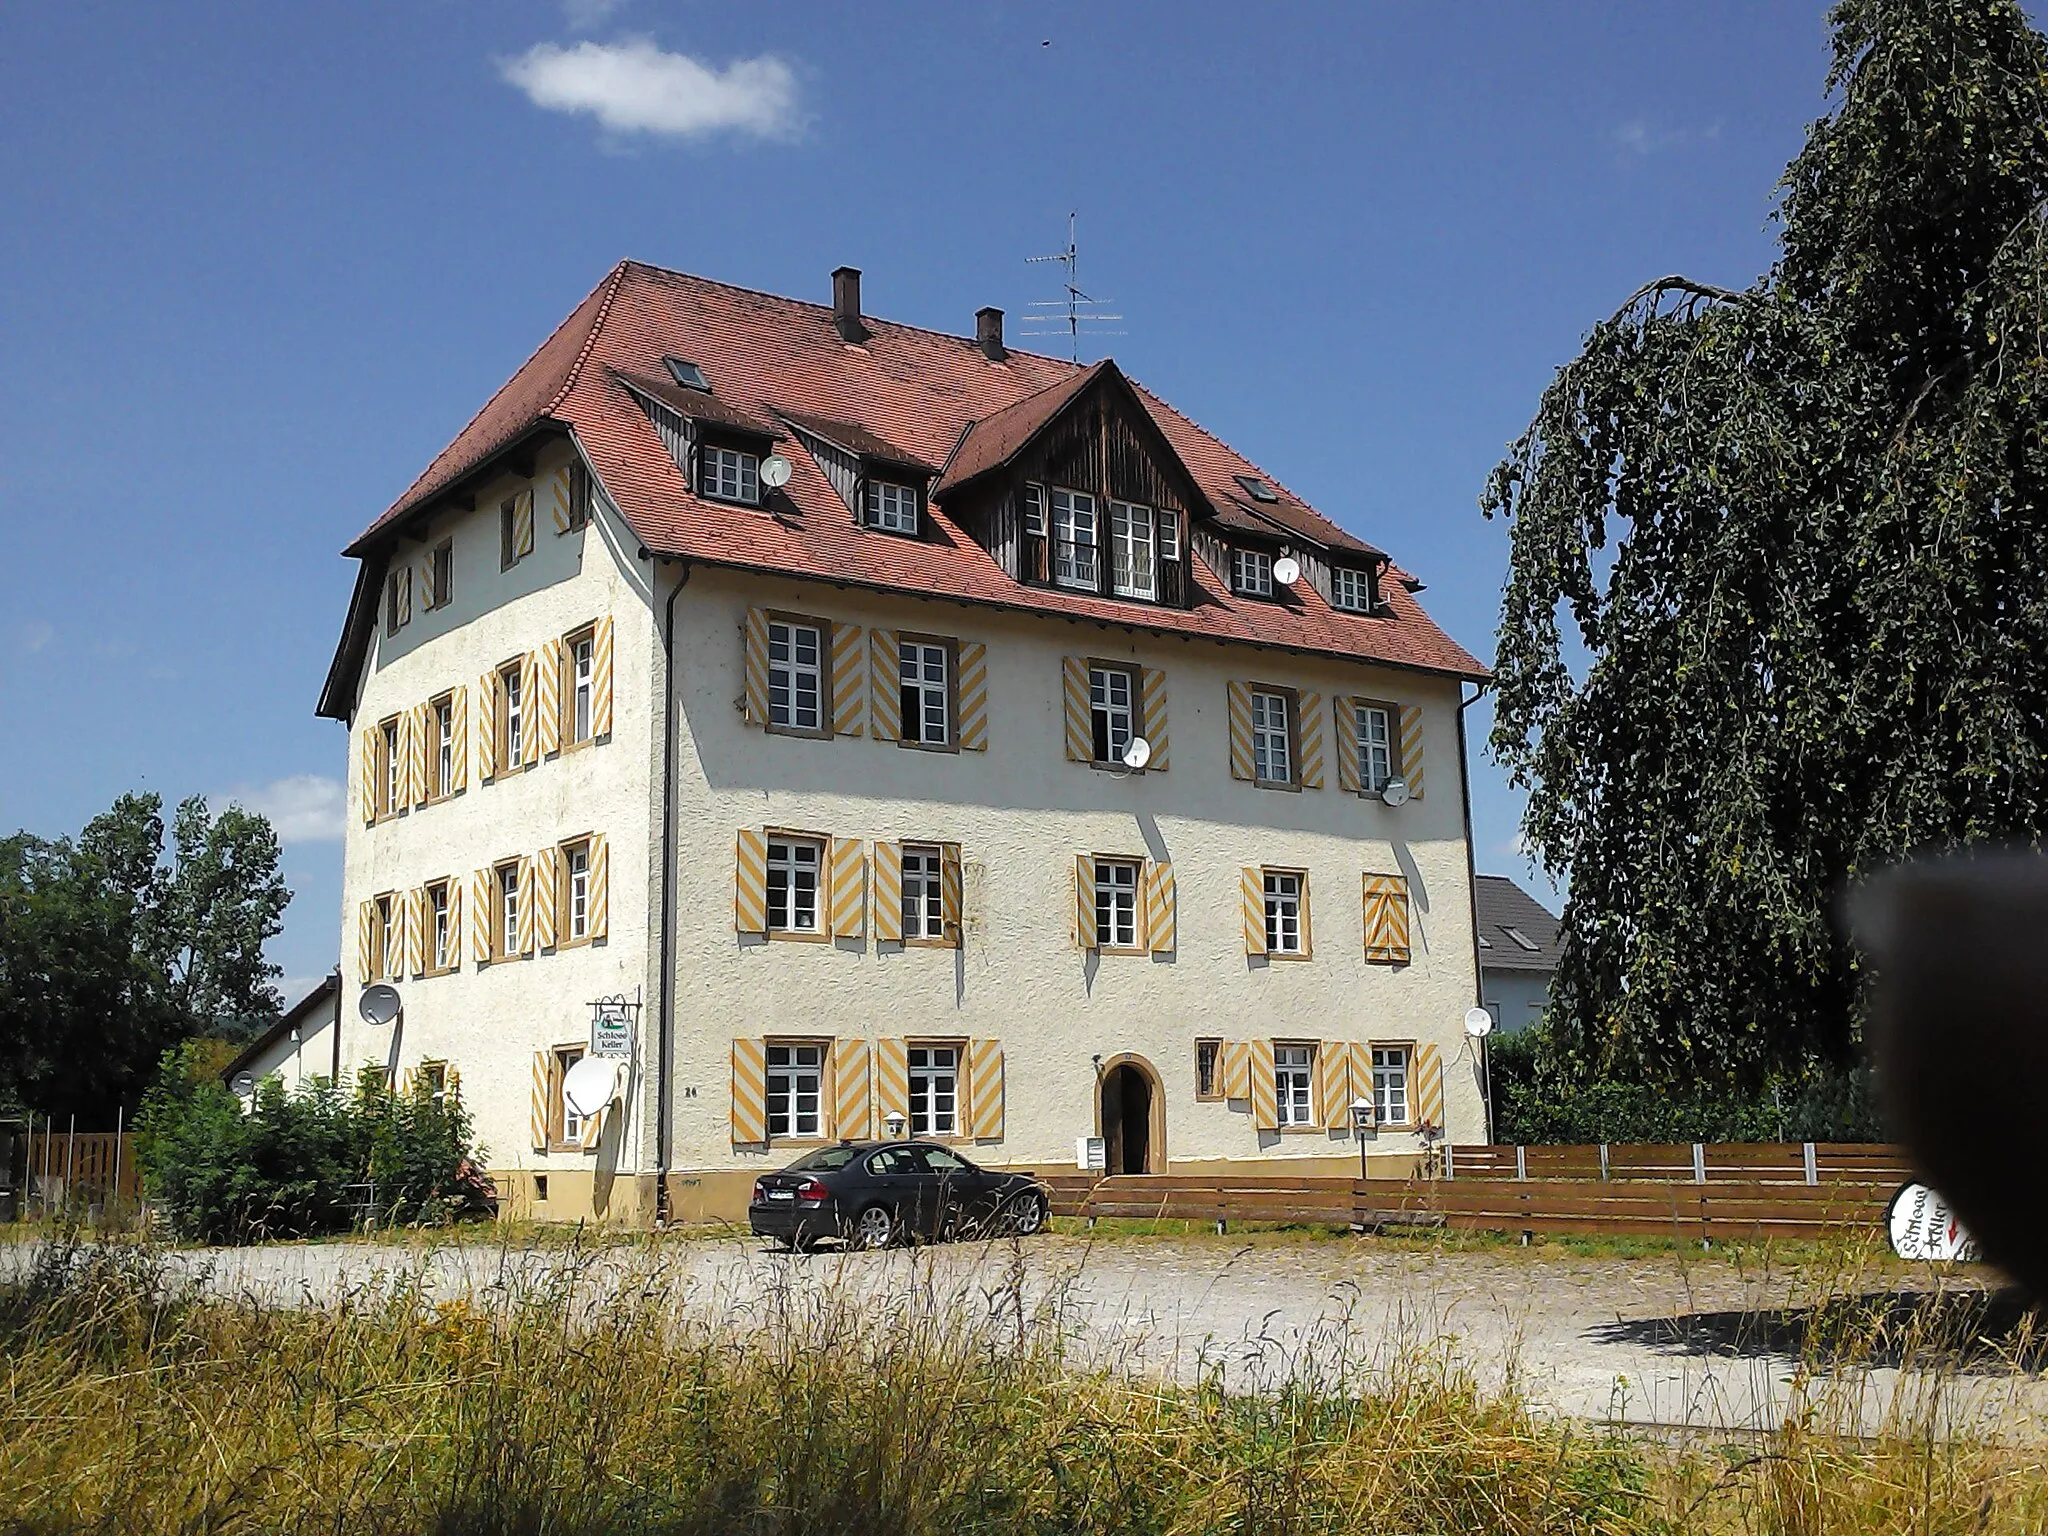 Photo showing: Wutöschingen, Schwerzen-Willmendingen, ehemaliges Schloss, heute umgebaut zum Wohnhaus.